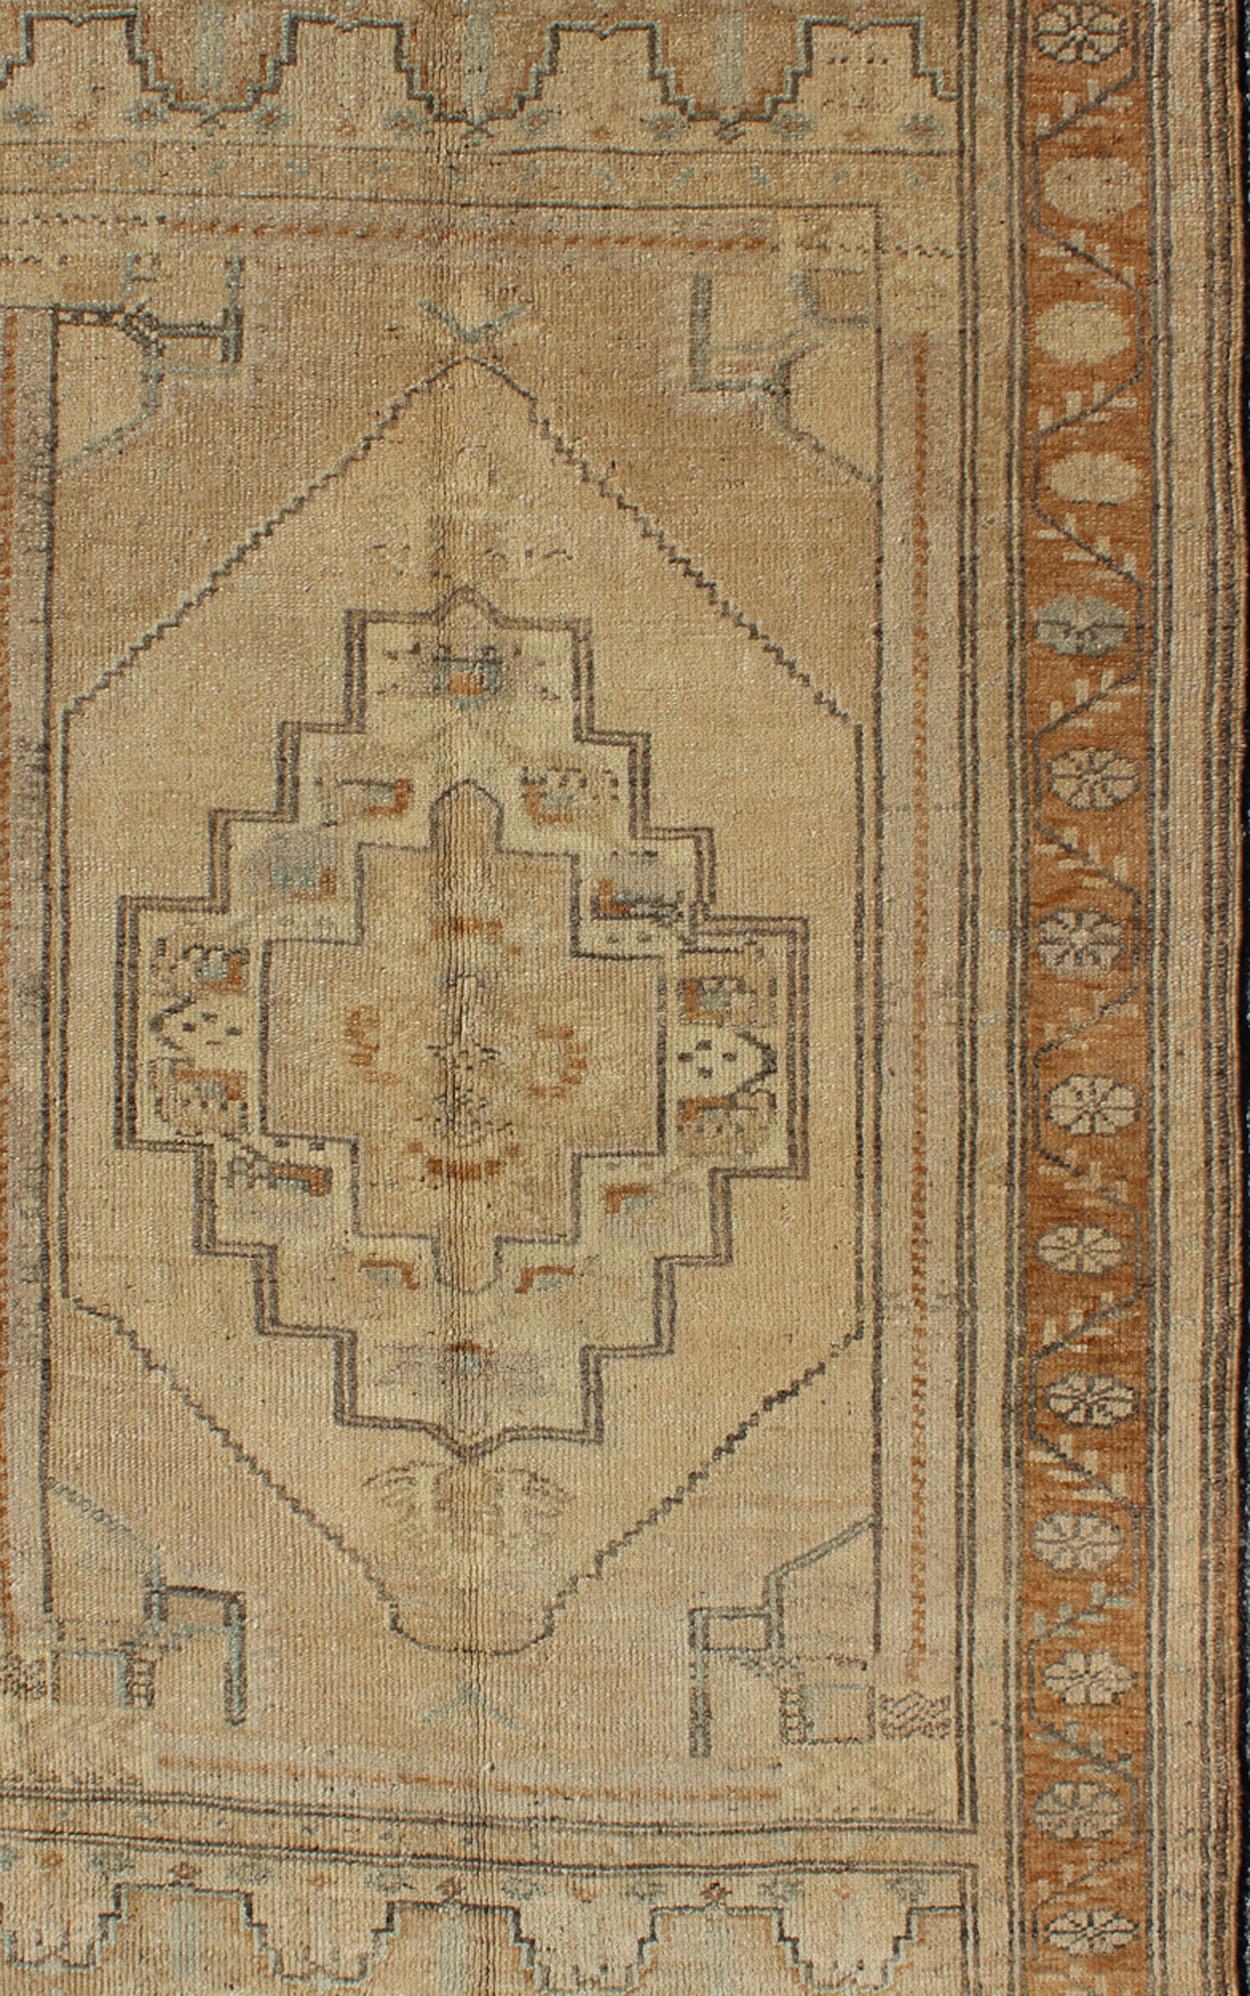 Medallion design Turkish vintage rug in neutral tones of tan, taupe, light brown, camel, and light green, rug TU-UGU-3344, country of origin / type: Turkey / Oushak, circa 1940.

Measures: 3'7 x 5'10.